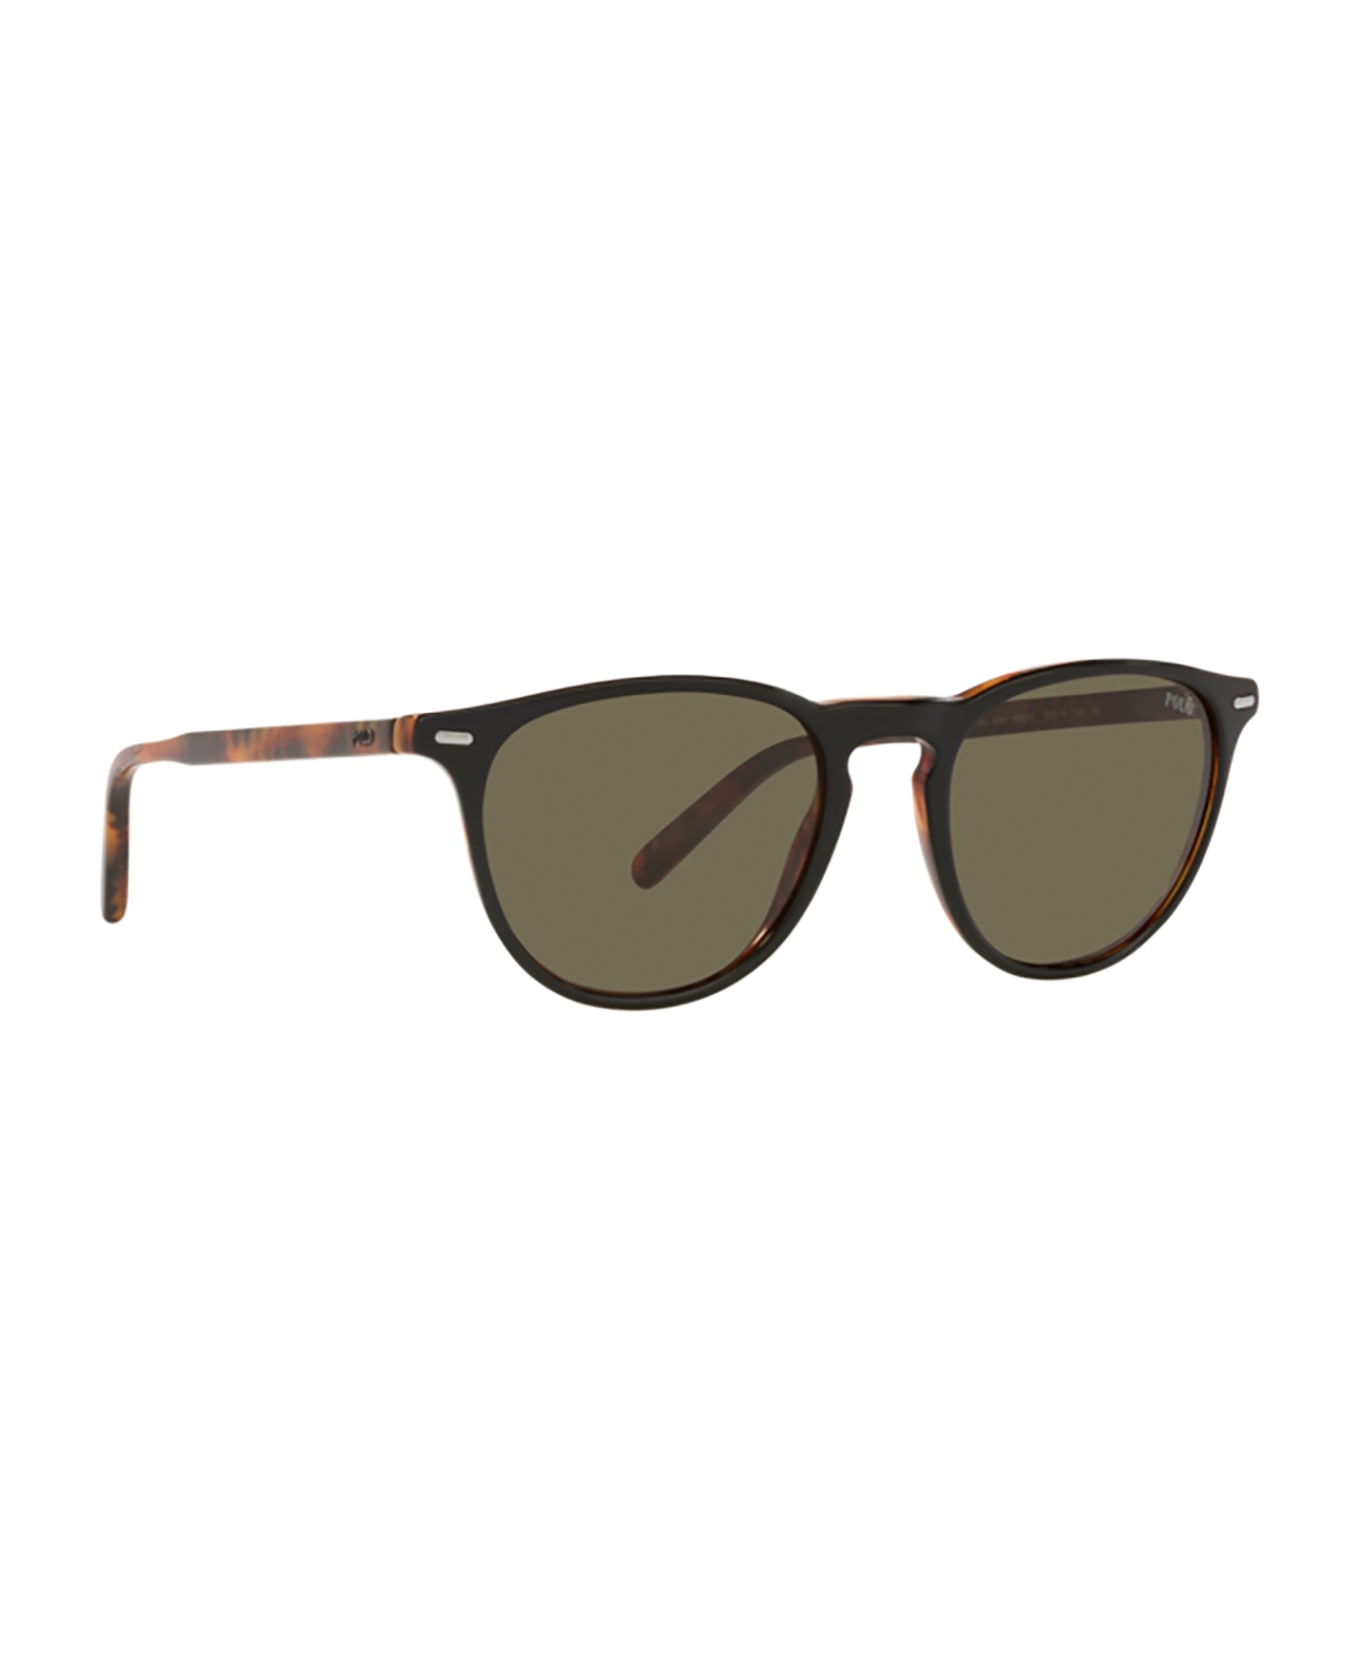 Polo Ralph Lauren Ph4181 Shiny Black Havana Sunglasses - Shiny black havana